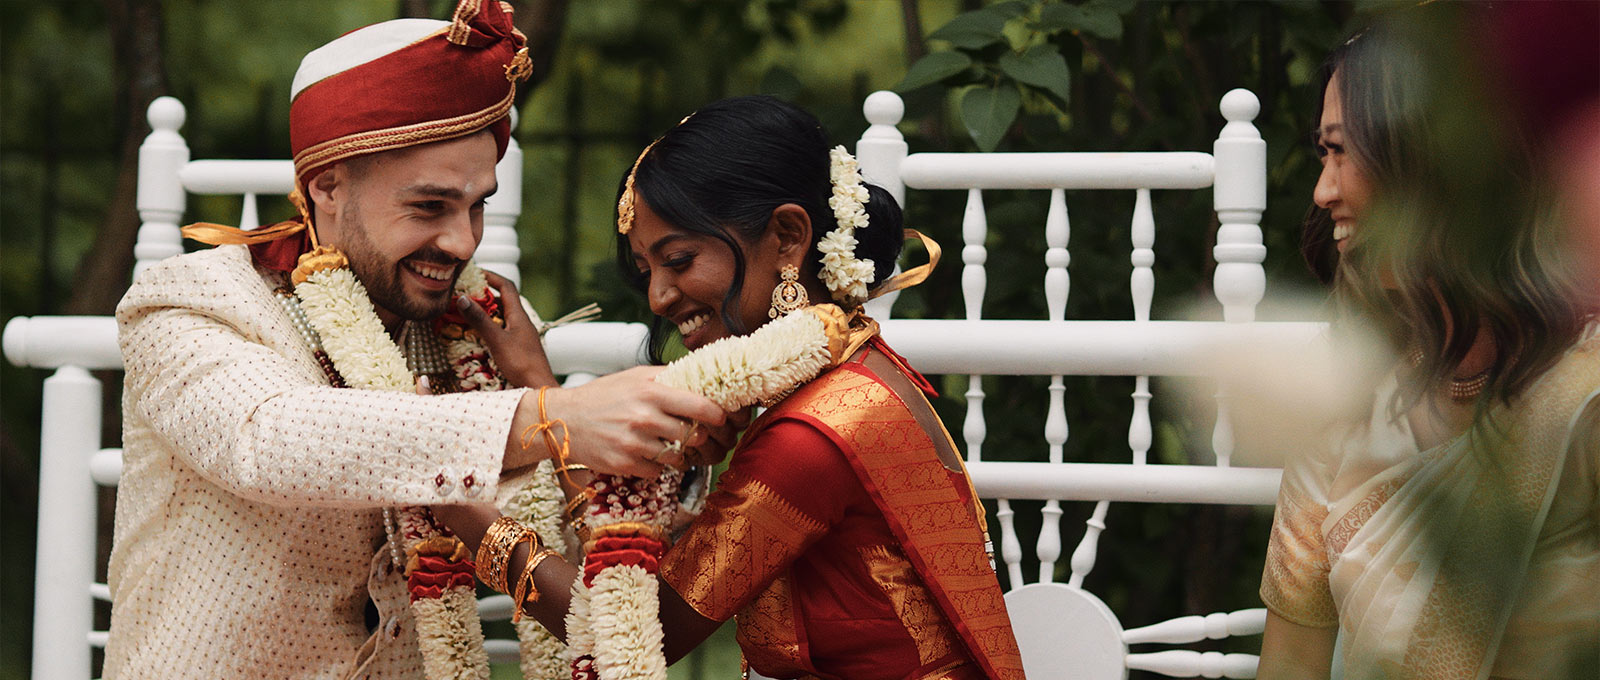 Hindu bride and groom exchange garlands during jayamala ceremony.